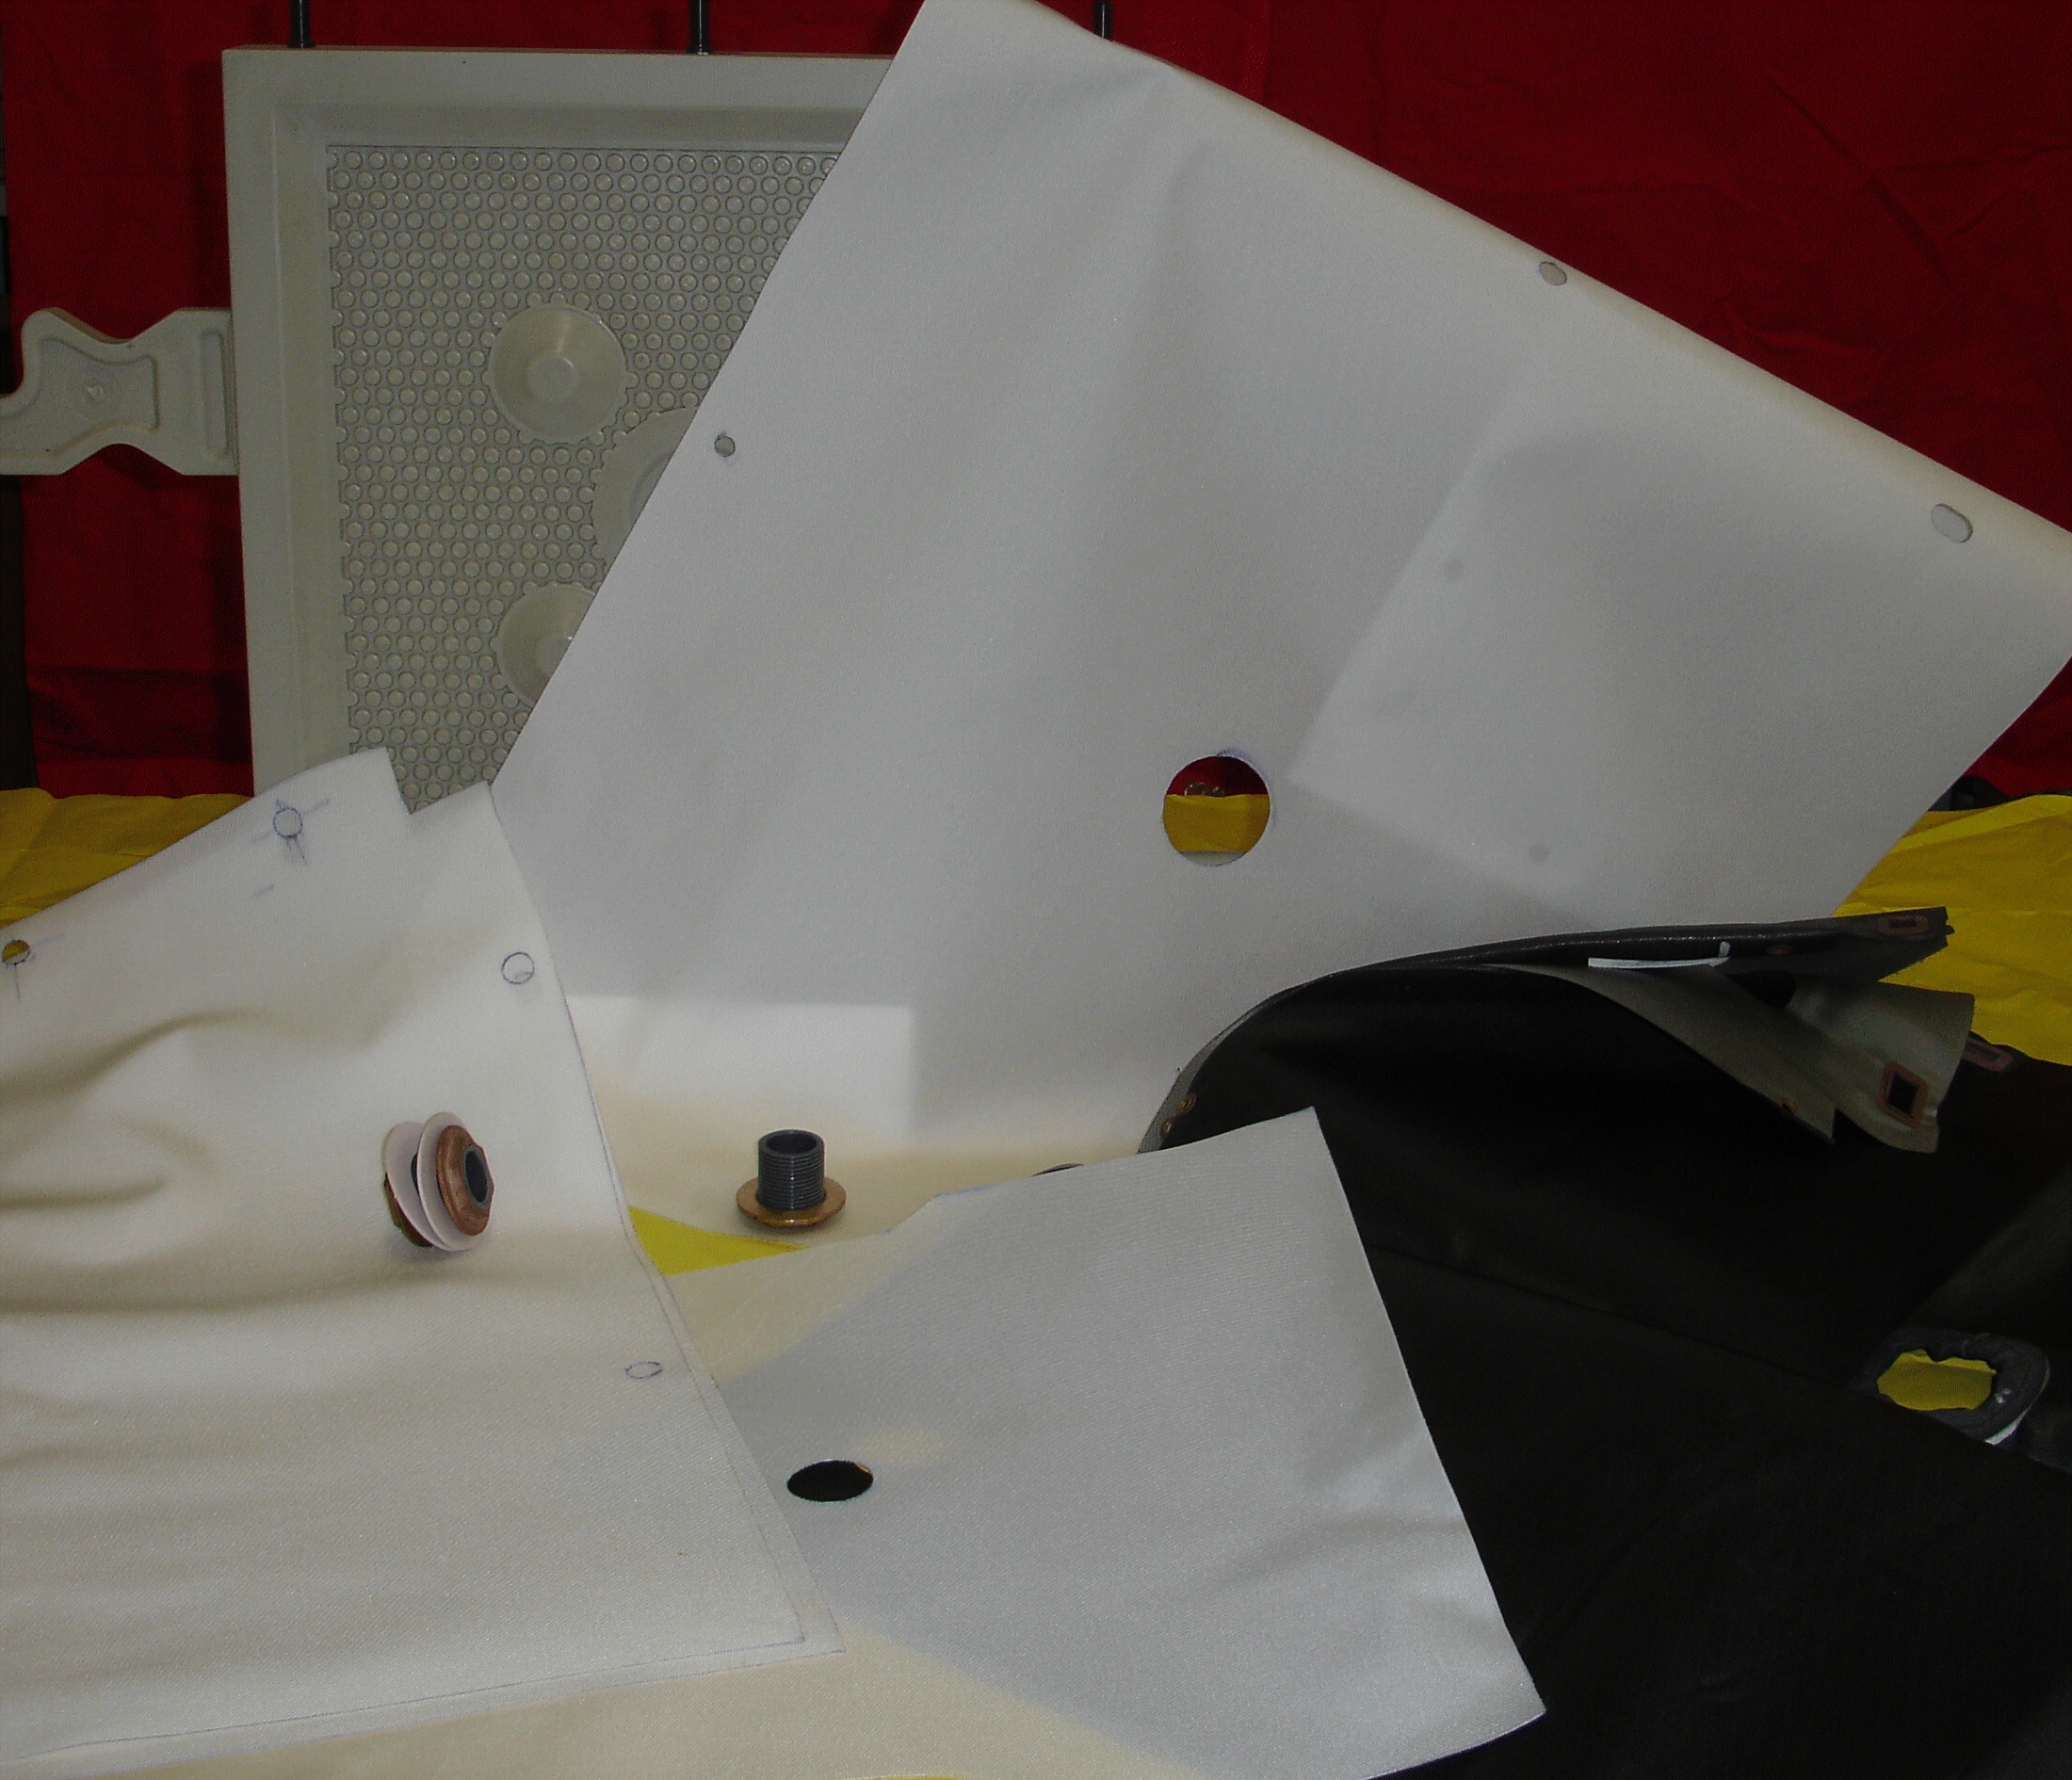 Filter cloths